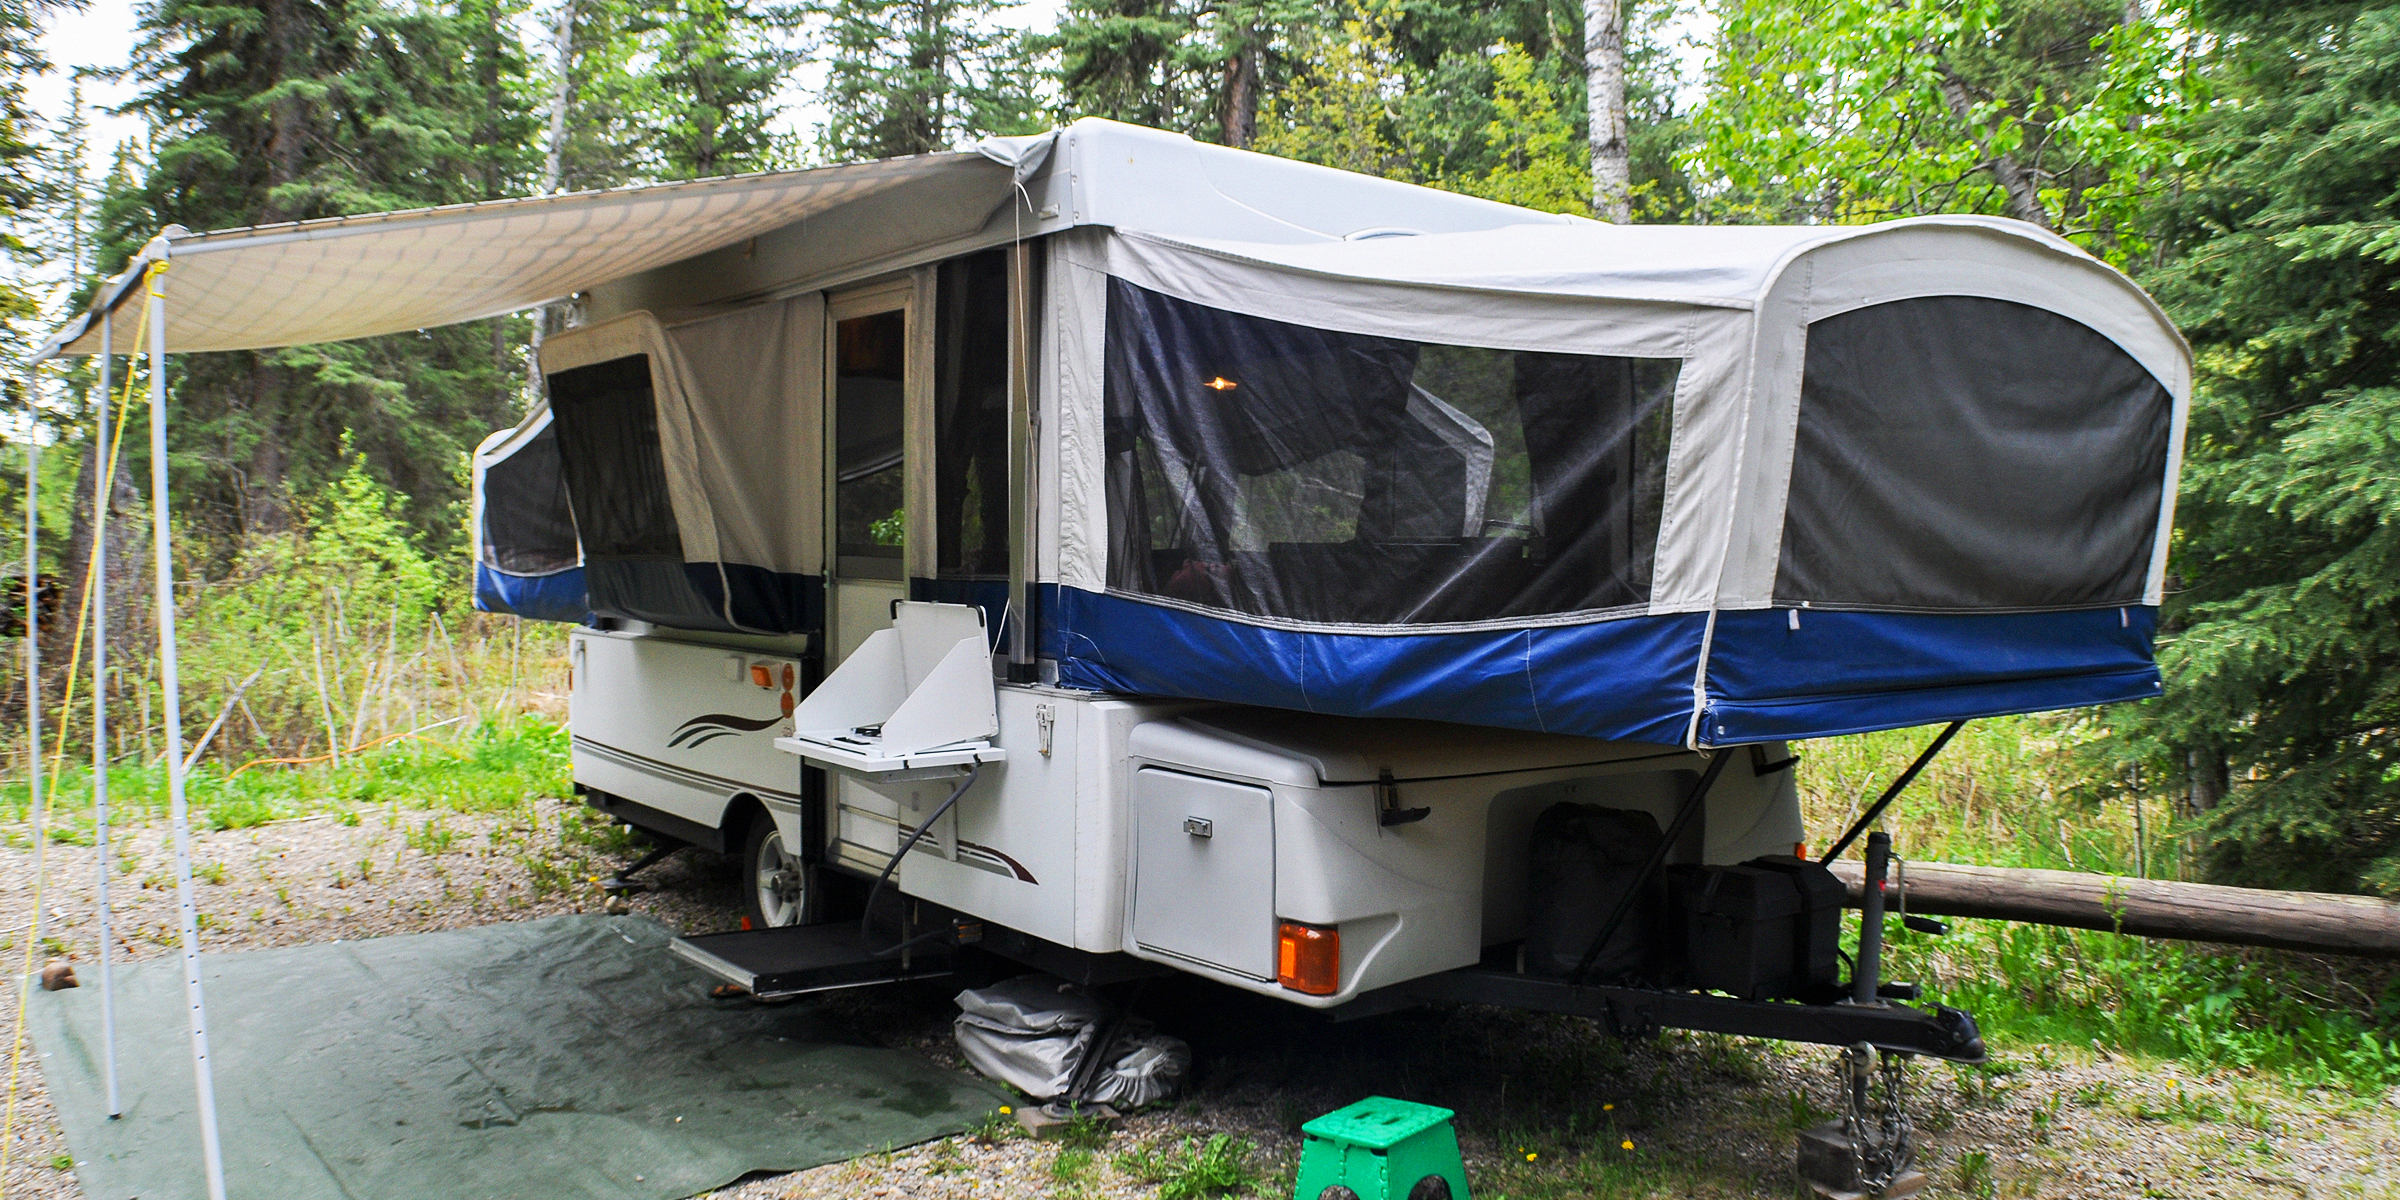 A picture of a camper | Source: Shutterstock